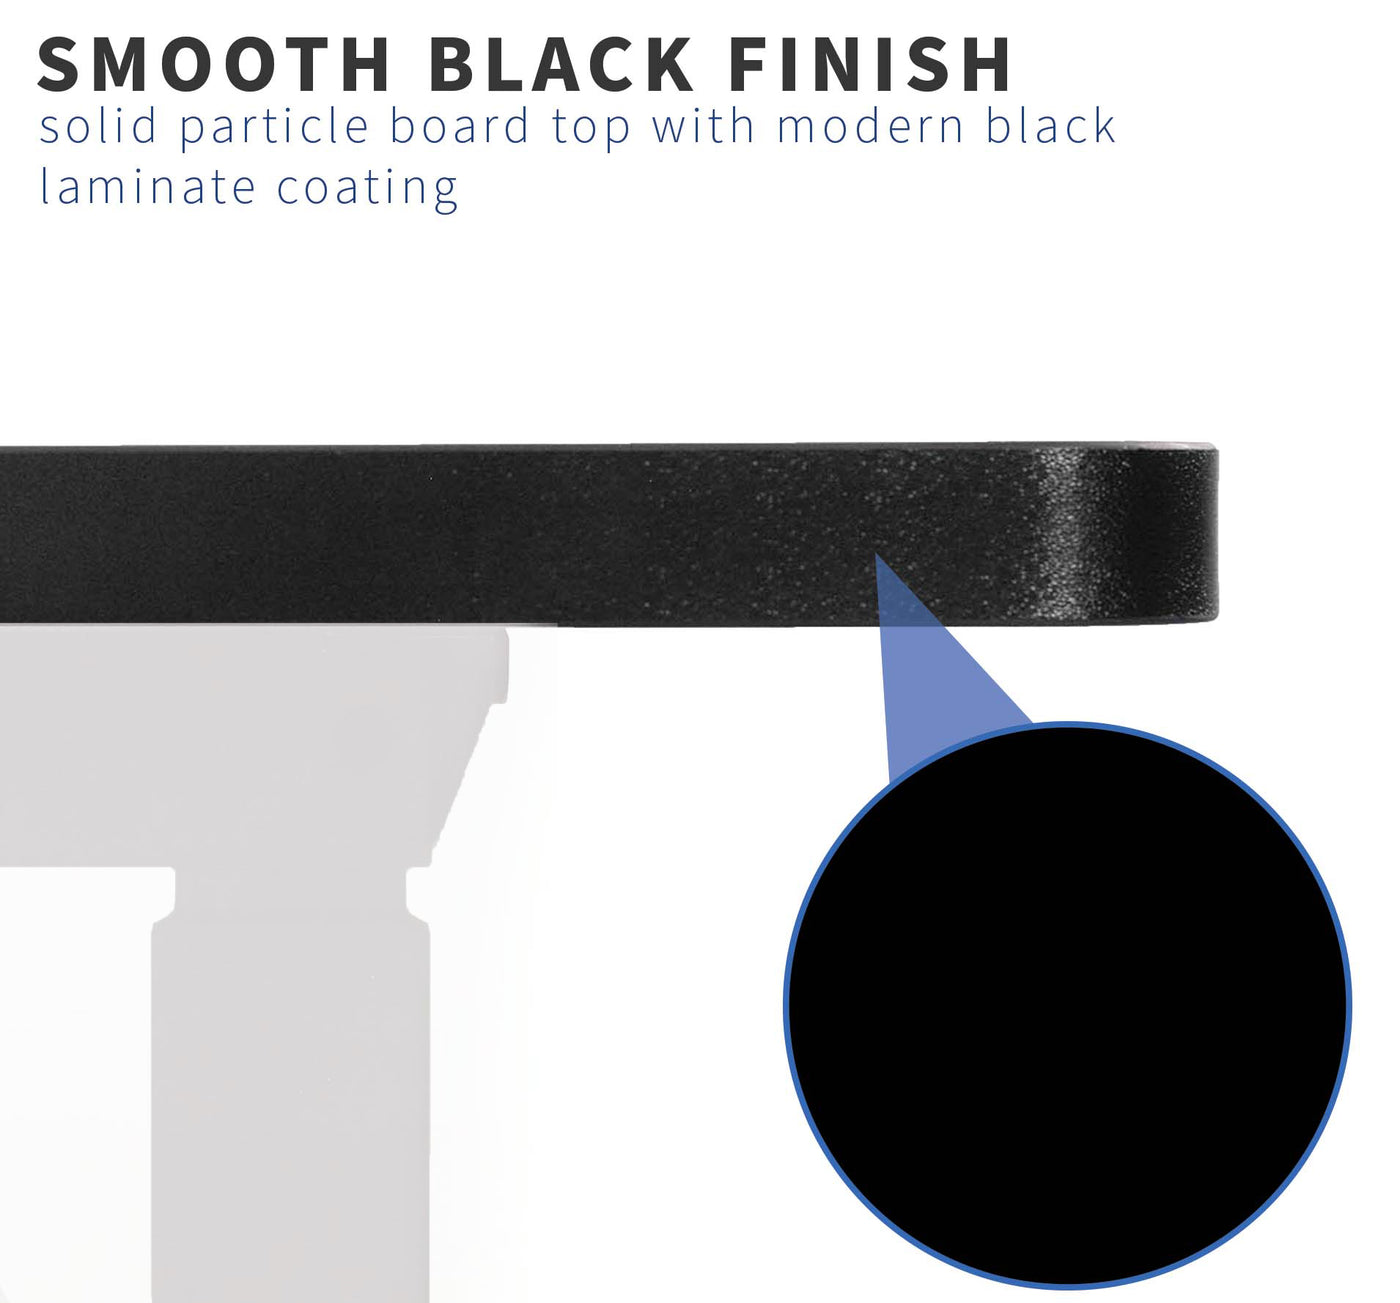 Sleek black finish, scratch resistant and waterproof tabletop.